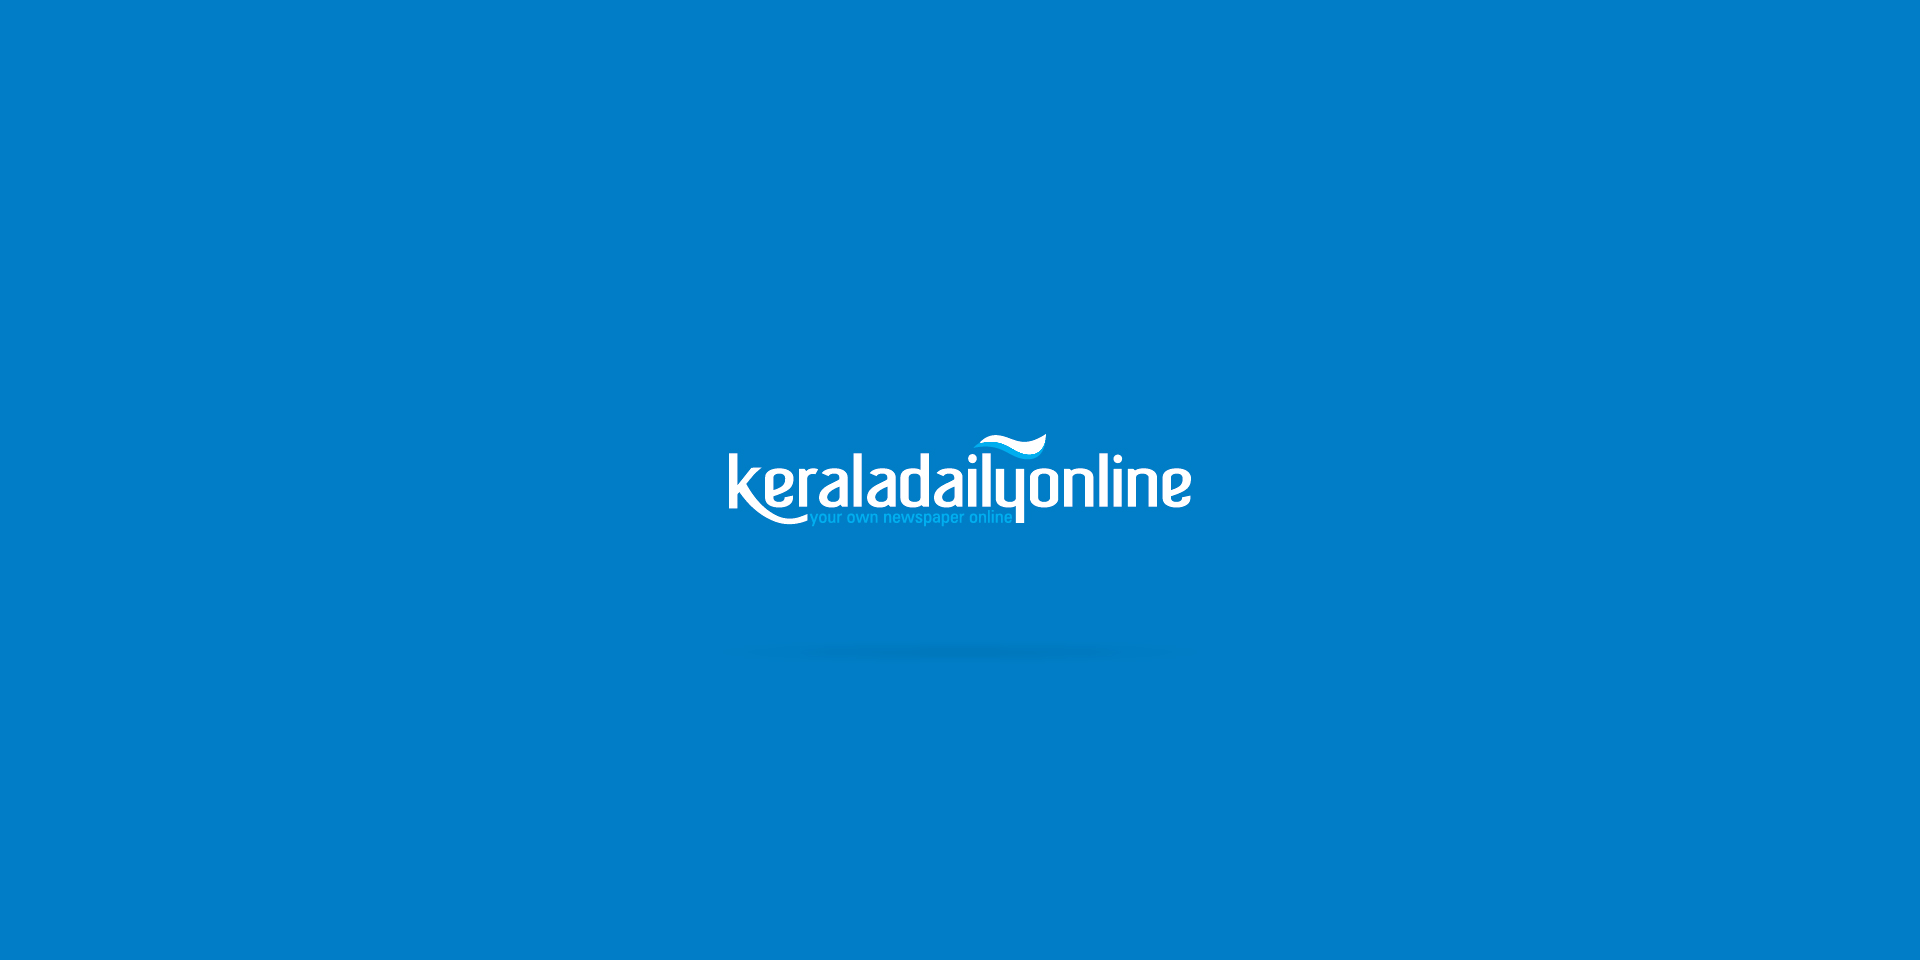 Branding and Digital Marketing agency in Kochi Cochin Kerala | Witsow Branding